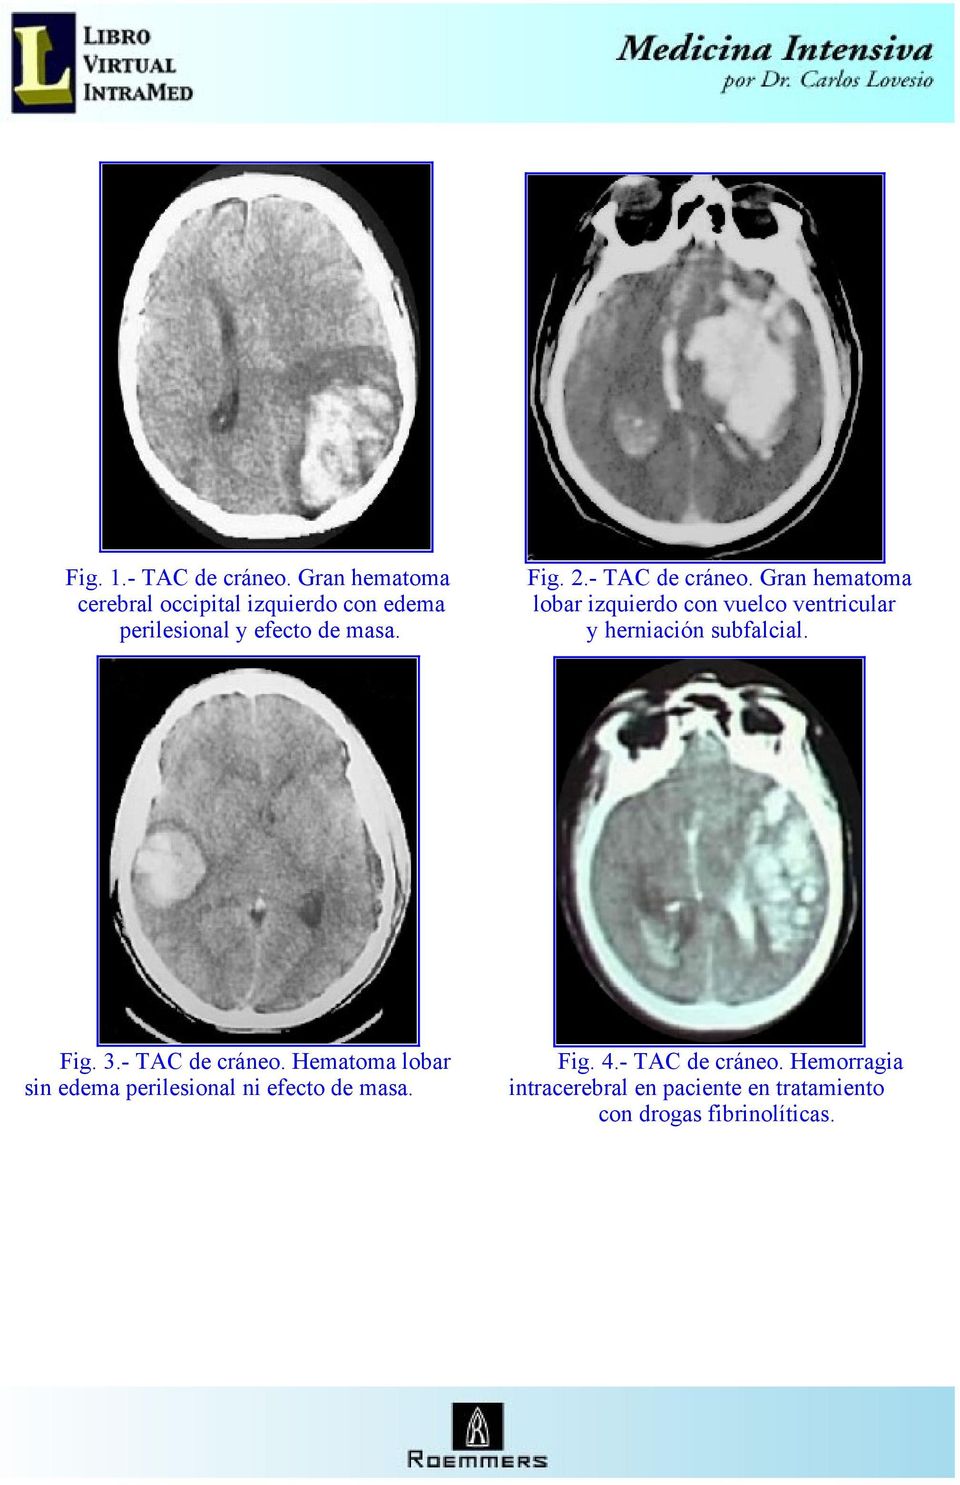 Gran hematoma cerebral occipital izquierdo con edema lobar izquierdo con vuelco ventricular